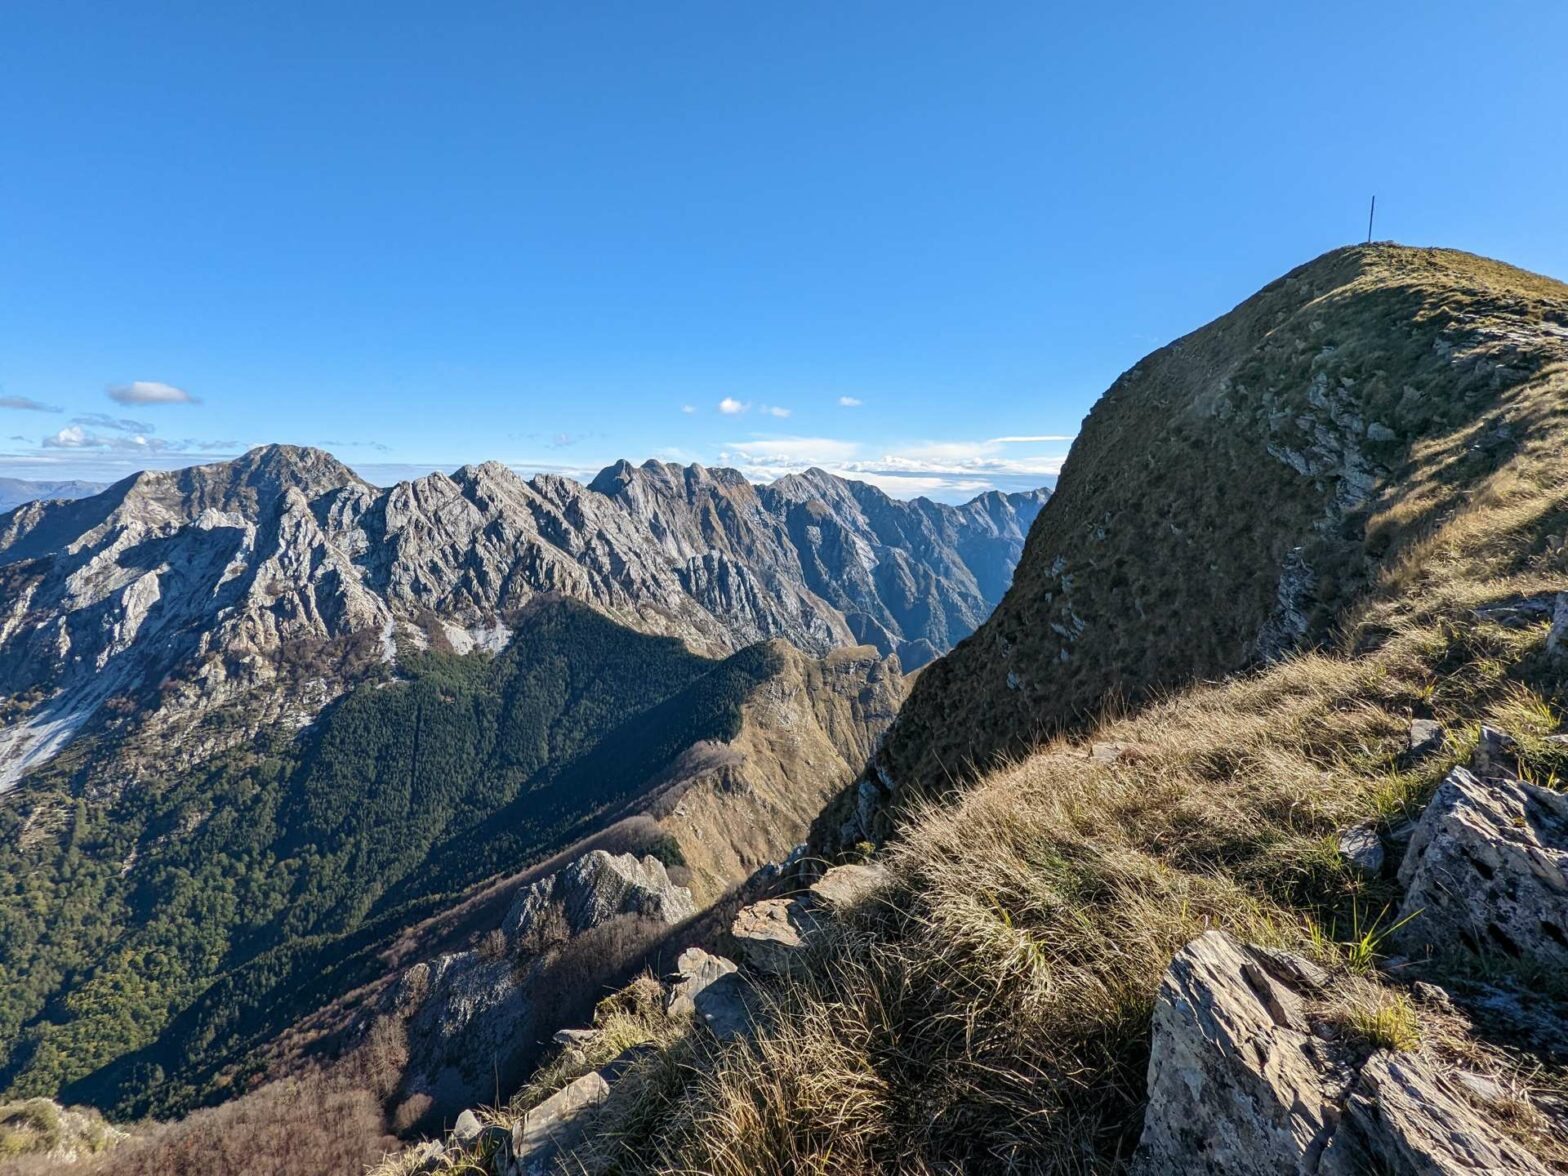 Monte Sagro mountain in the Apuan Alps